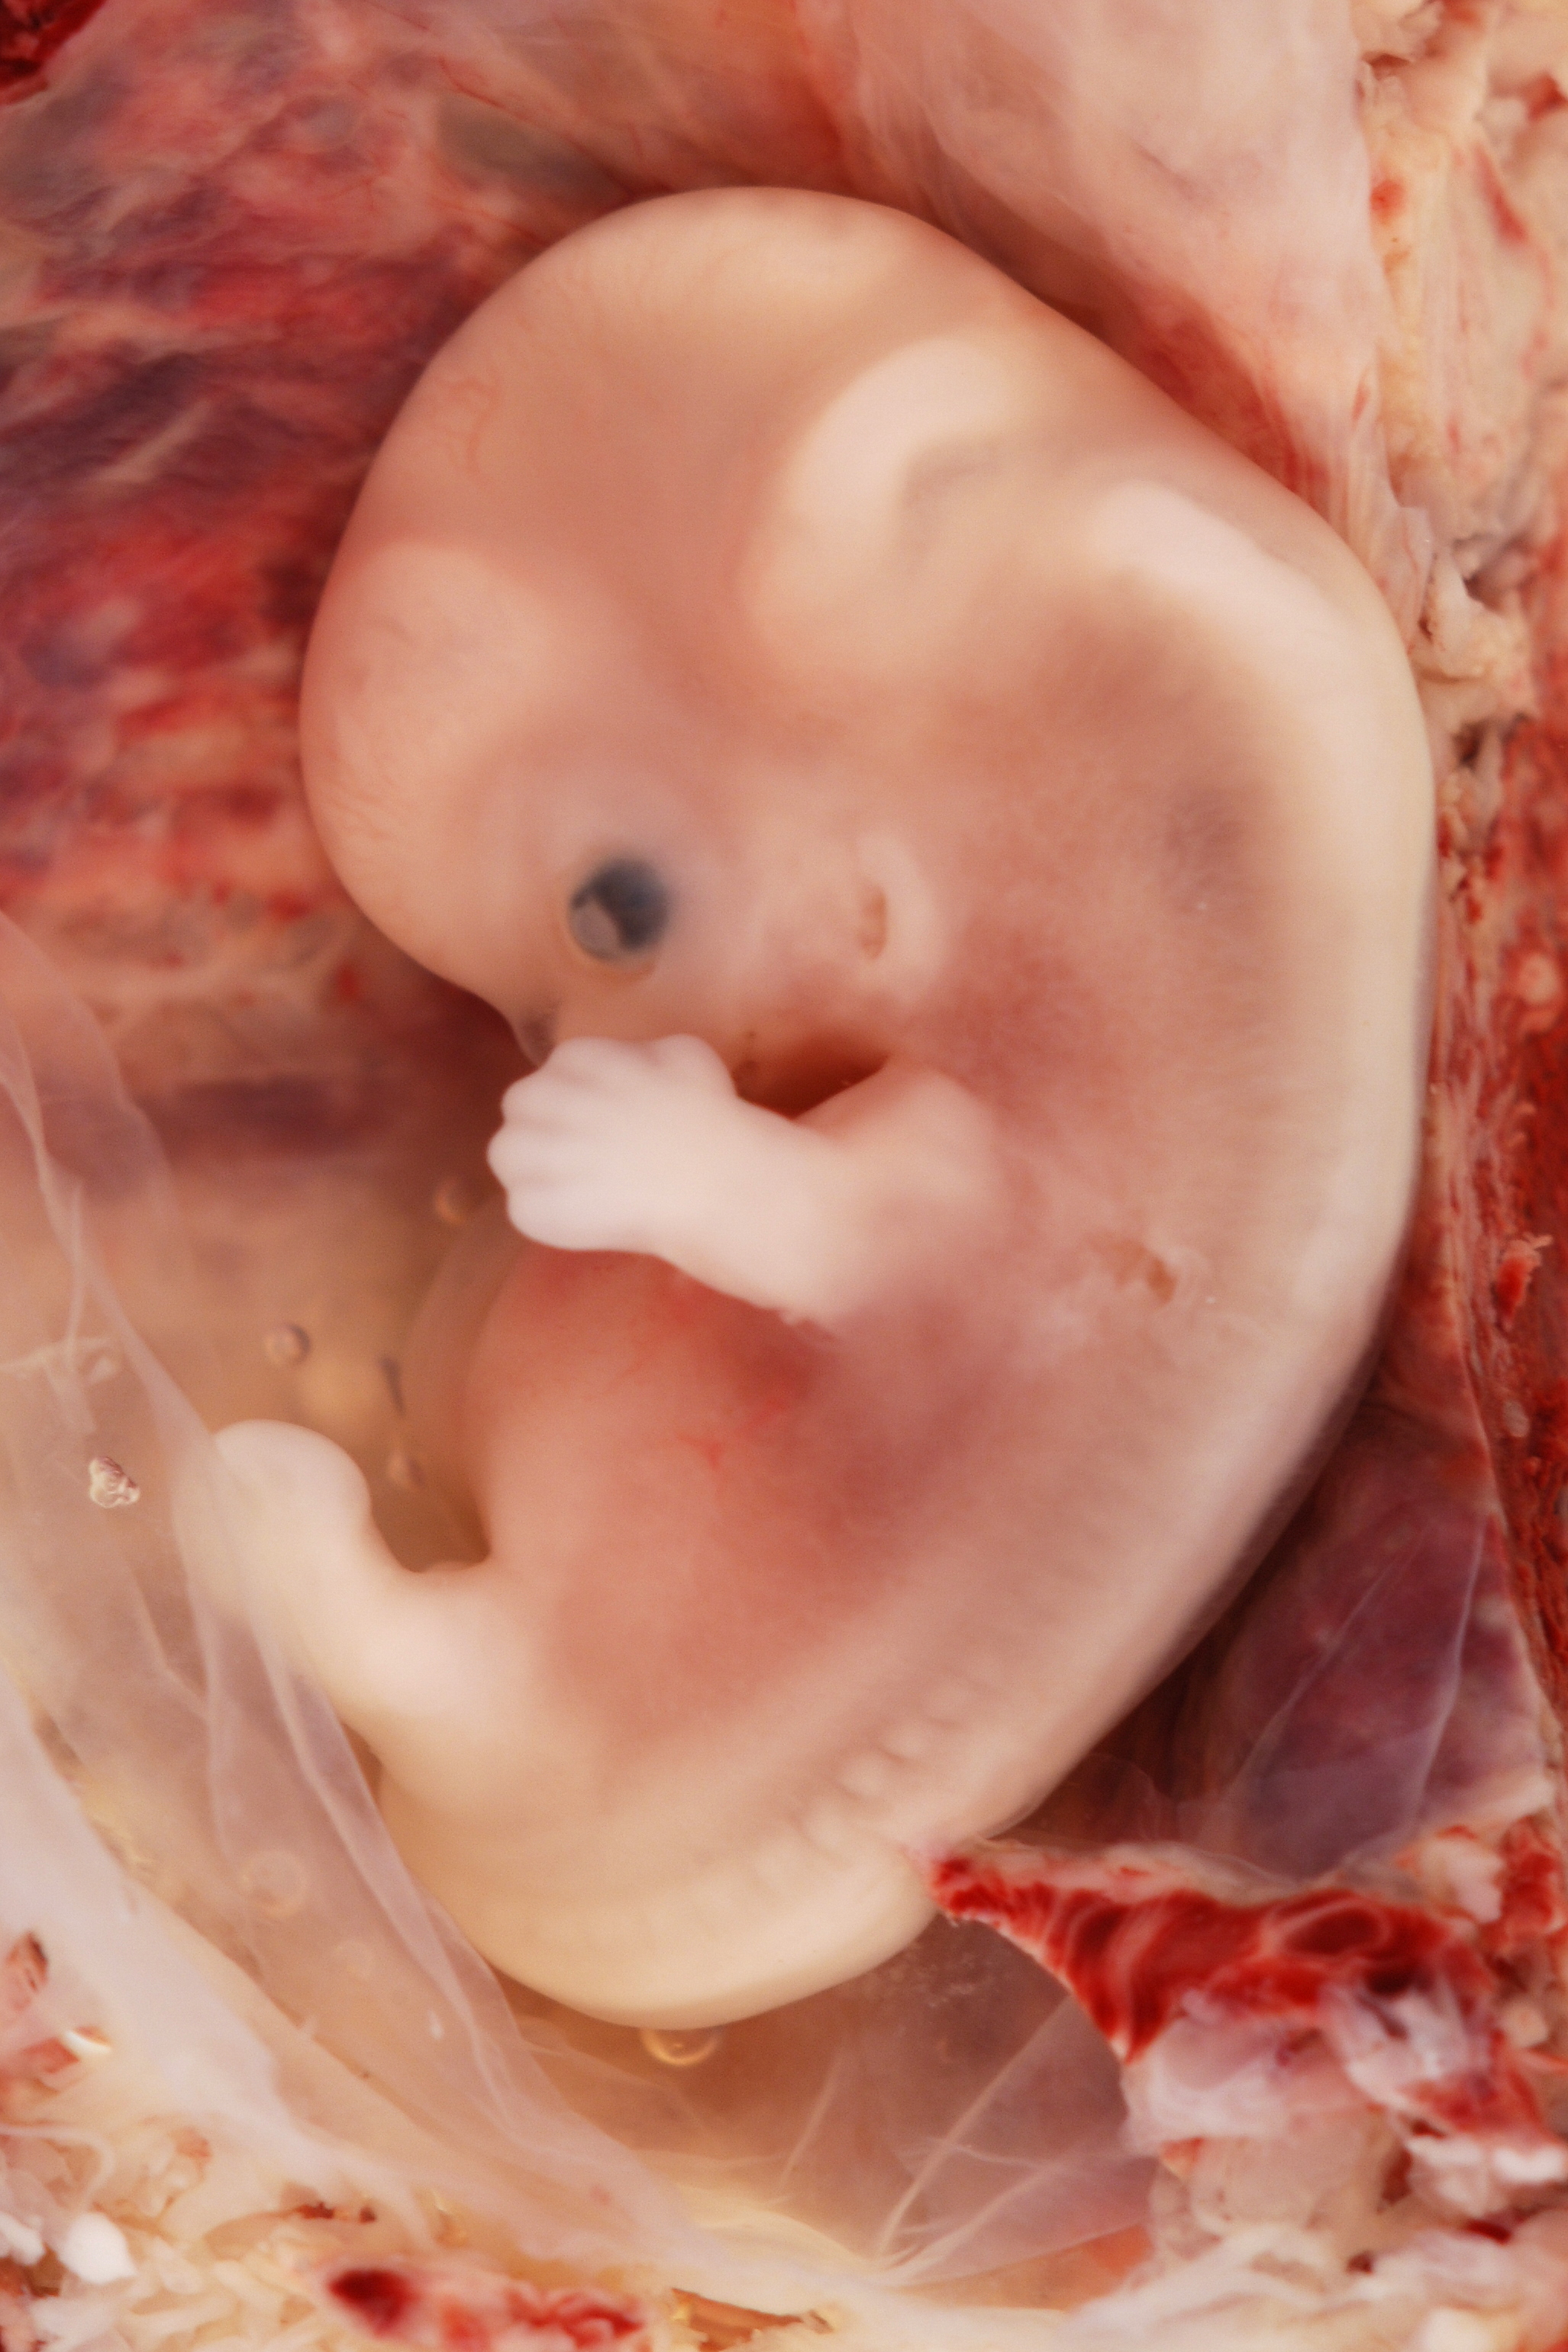 Archivo 9 Week Human Embryo From Ectopic Pregnancy Jpg Wikipedia La Enciclopedia Libre